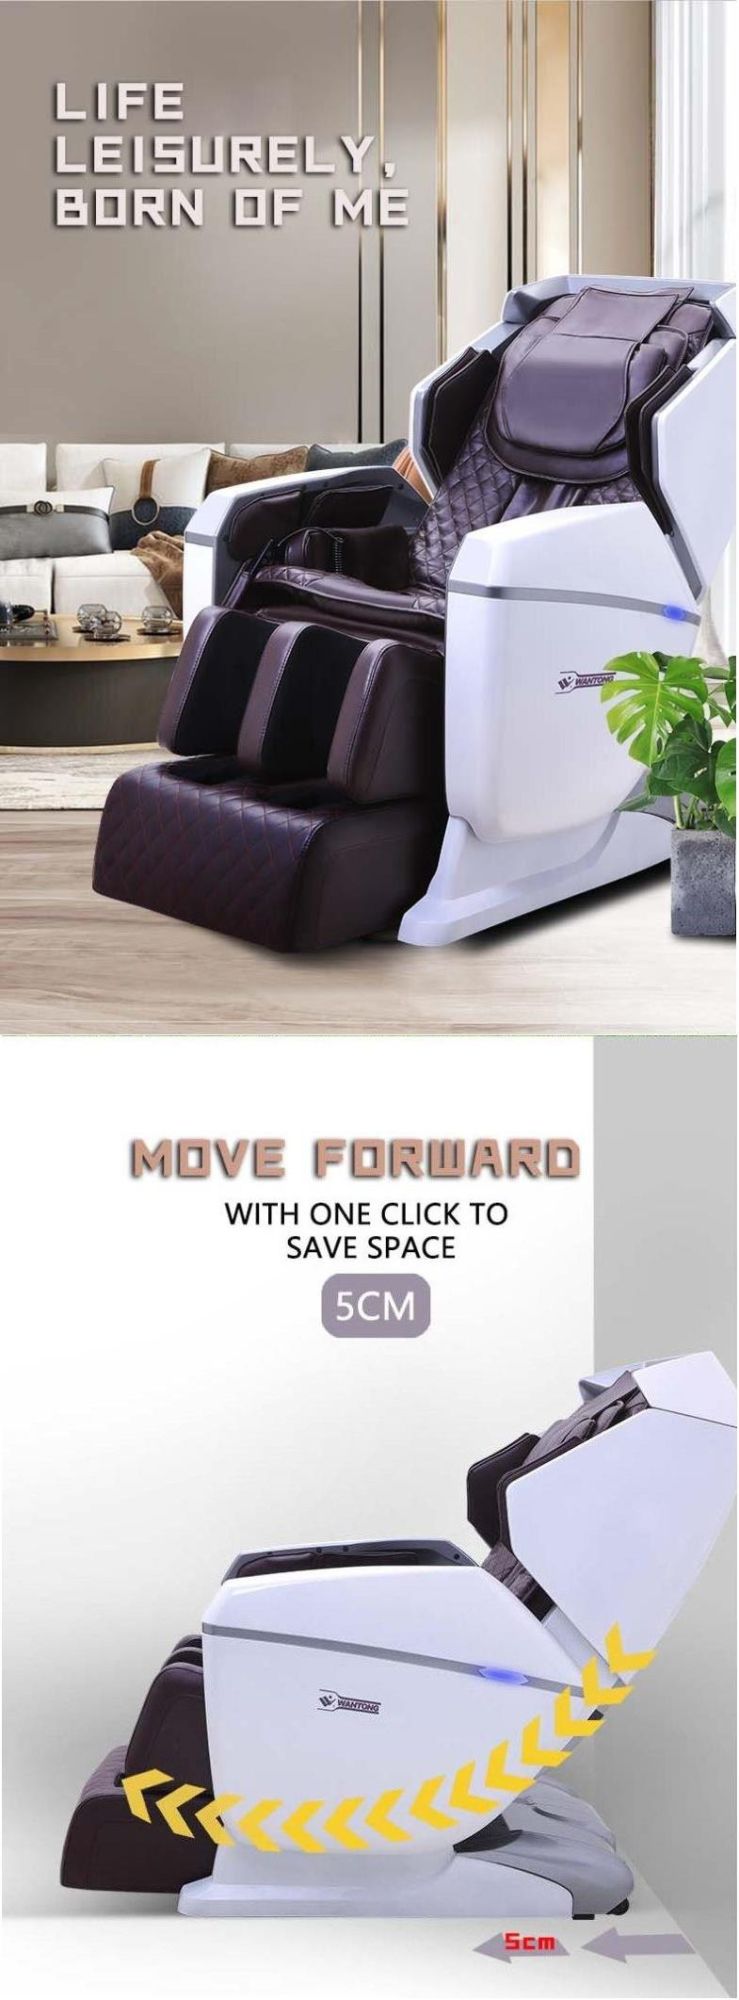 Professional Heated Seat Cushion Best Massage Chair